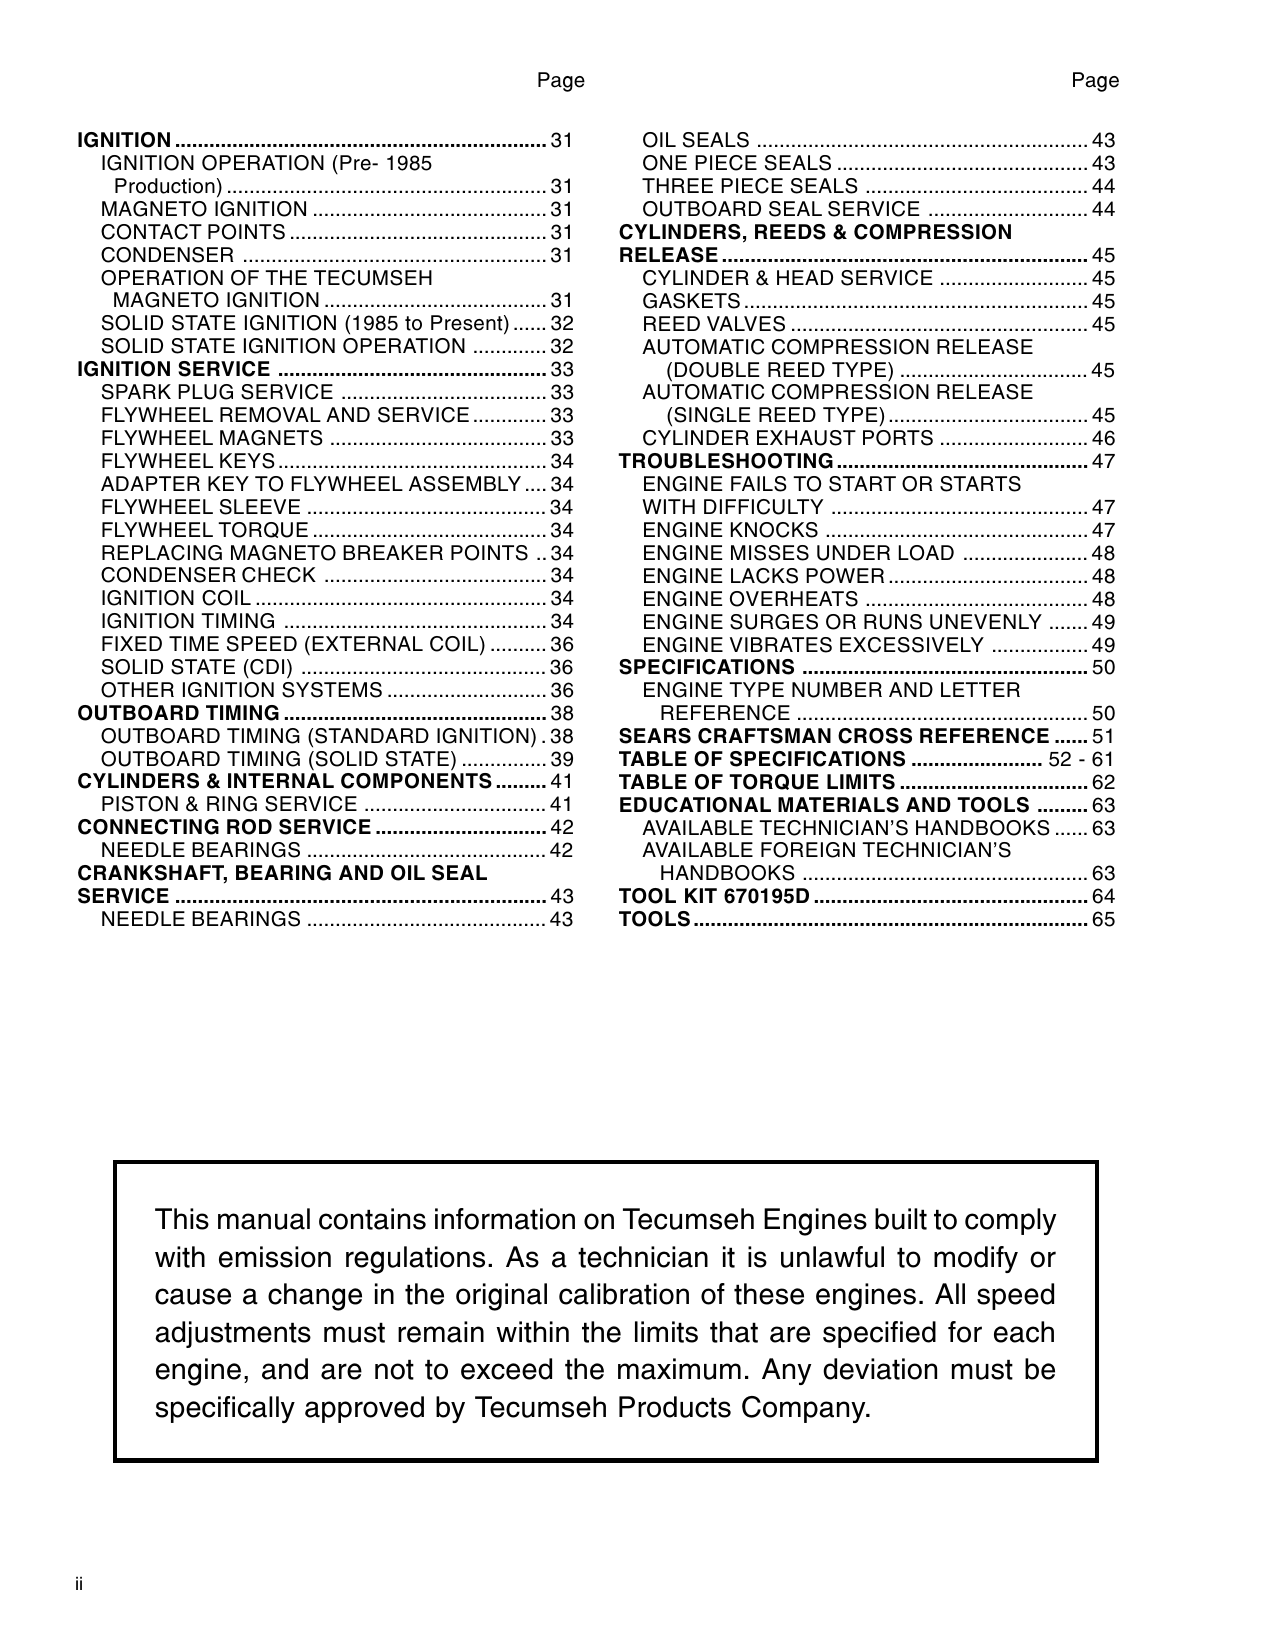 Tecumseh Craftsman, AH520, AH600, AV520, AV600, HSK600, TVS600, Craftsman 200 series engine technicans handbook Preview image 3